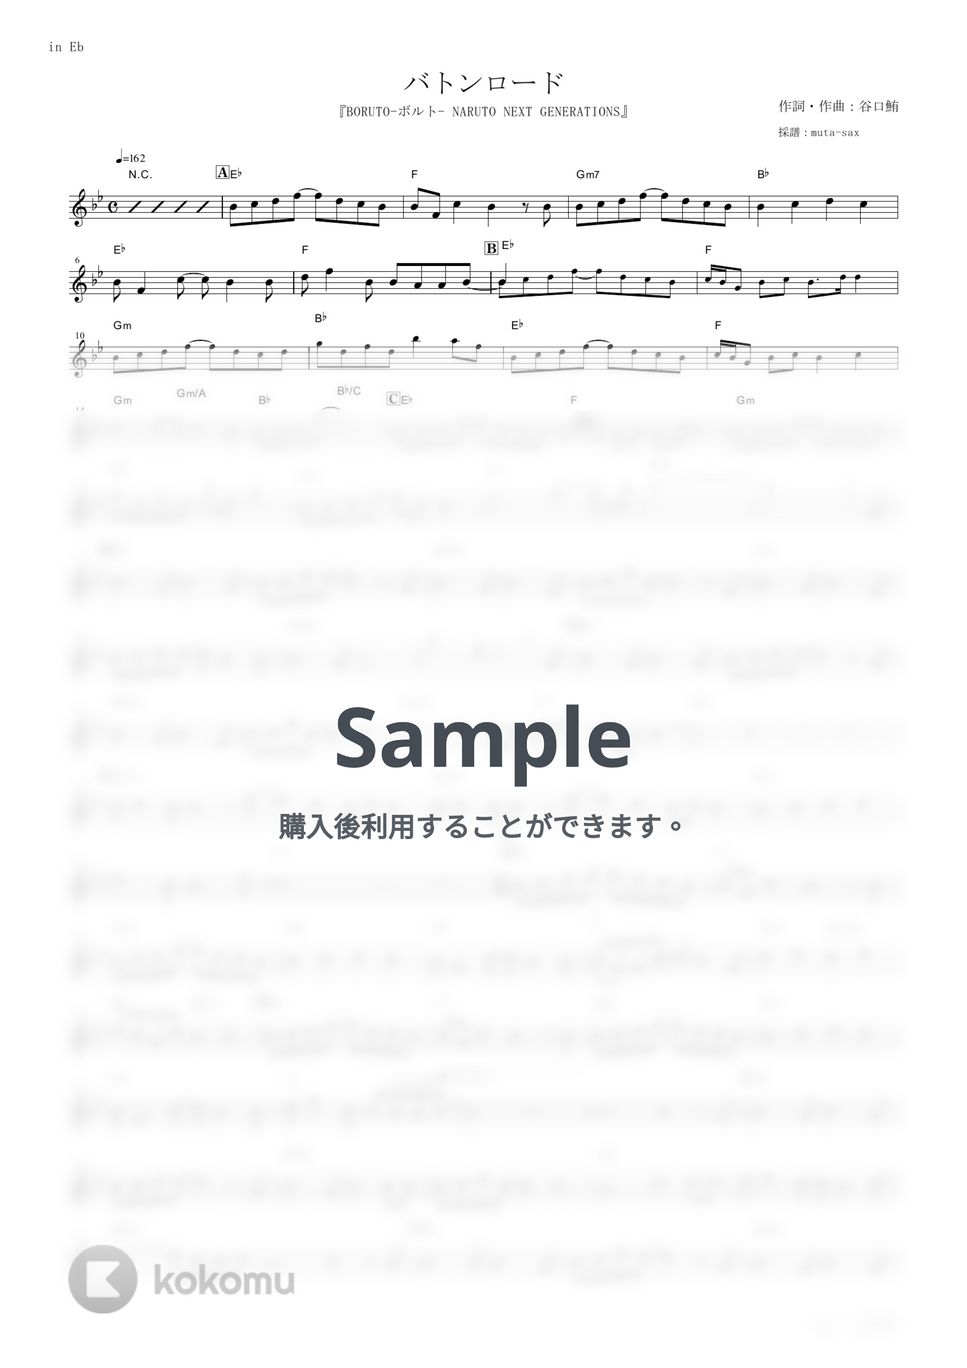 KANA-BOON - バトンロード (『BORUTO-ボルト- NARUTO NEXT GENERATIONS』 / in Eb) by muta-sax